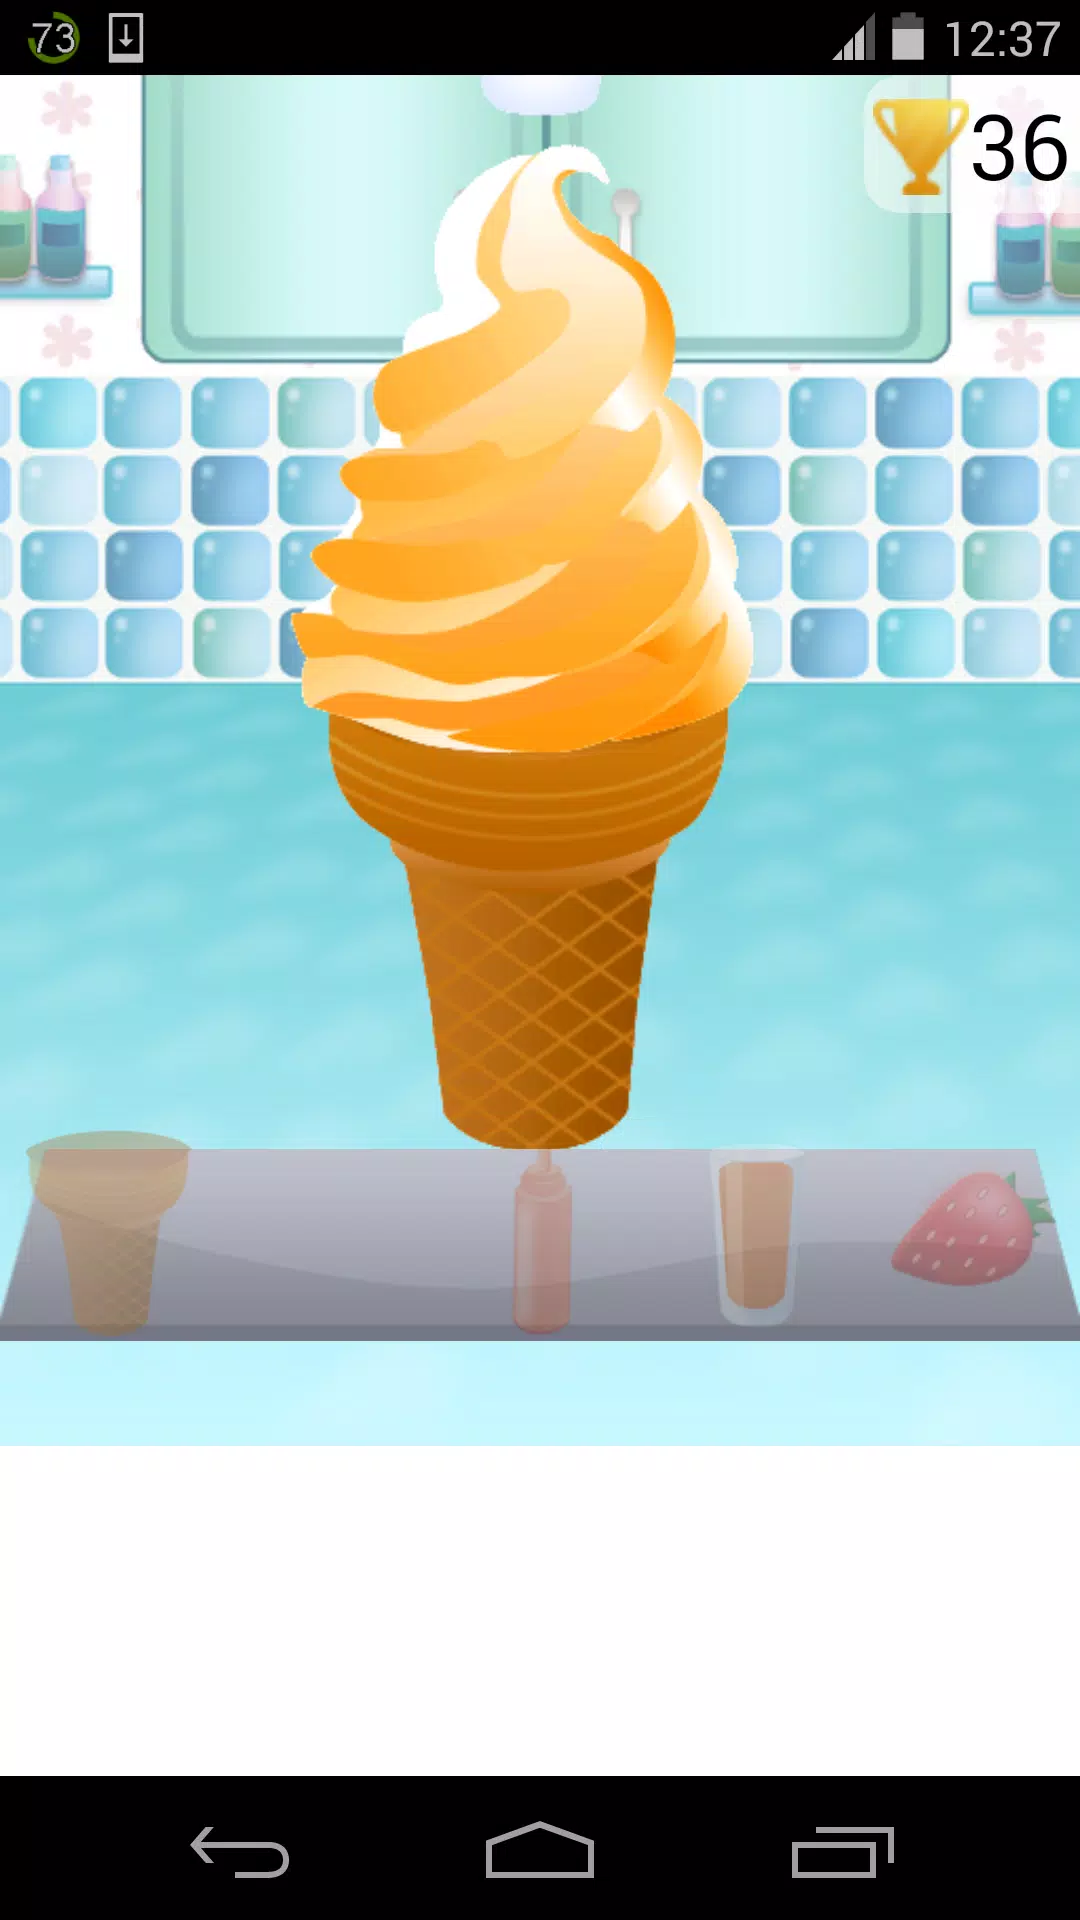 O jogo do sorvete na fase 36 